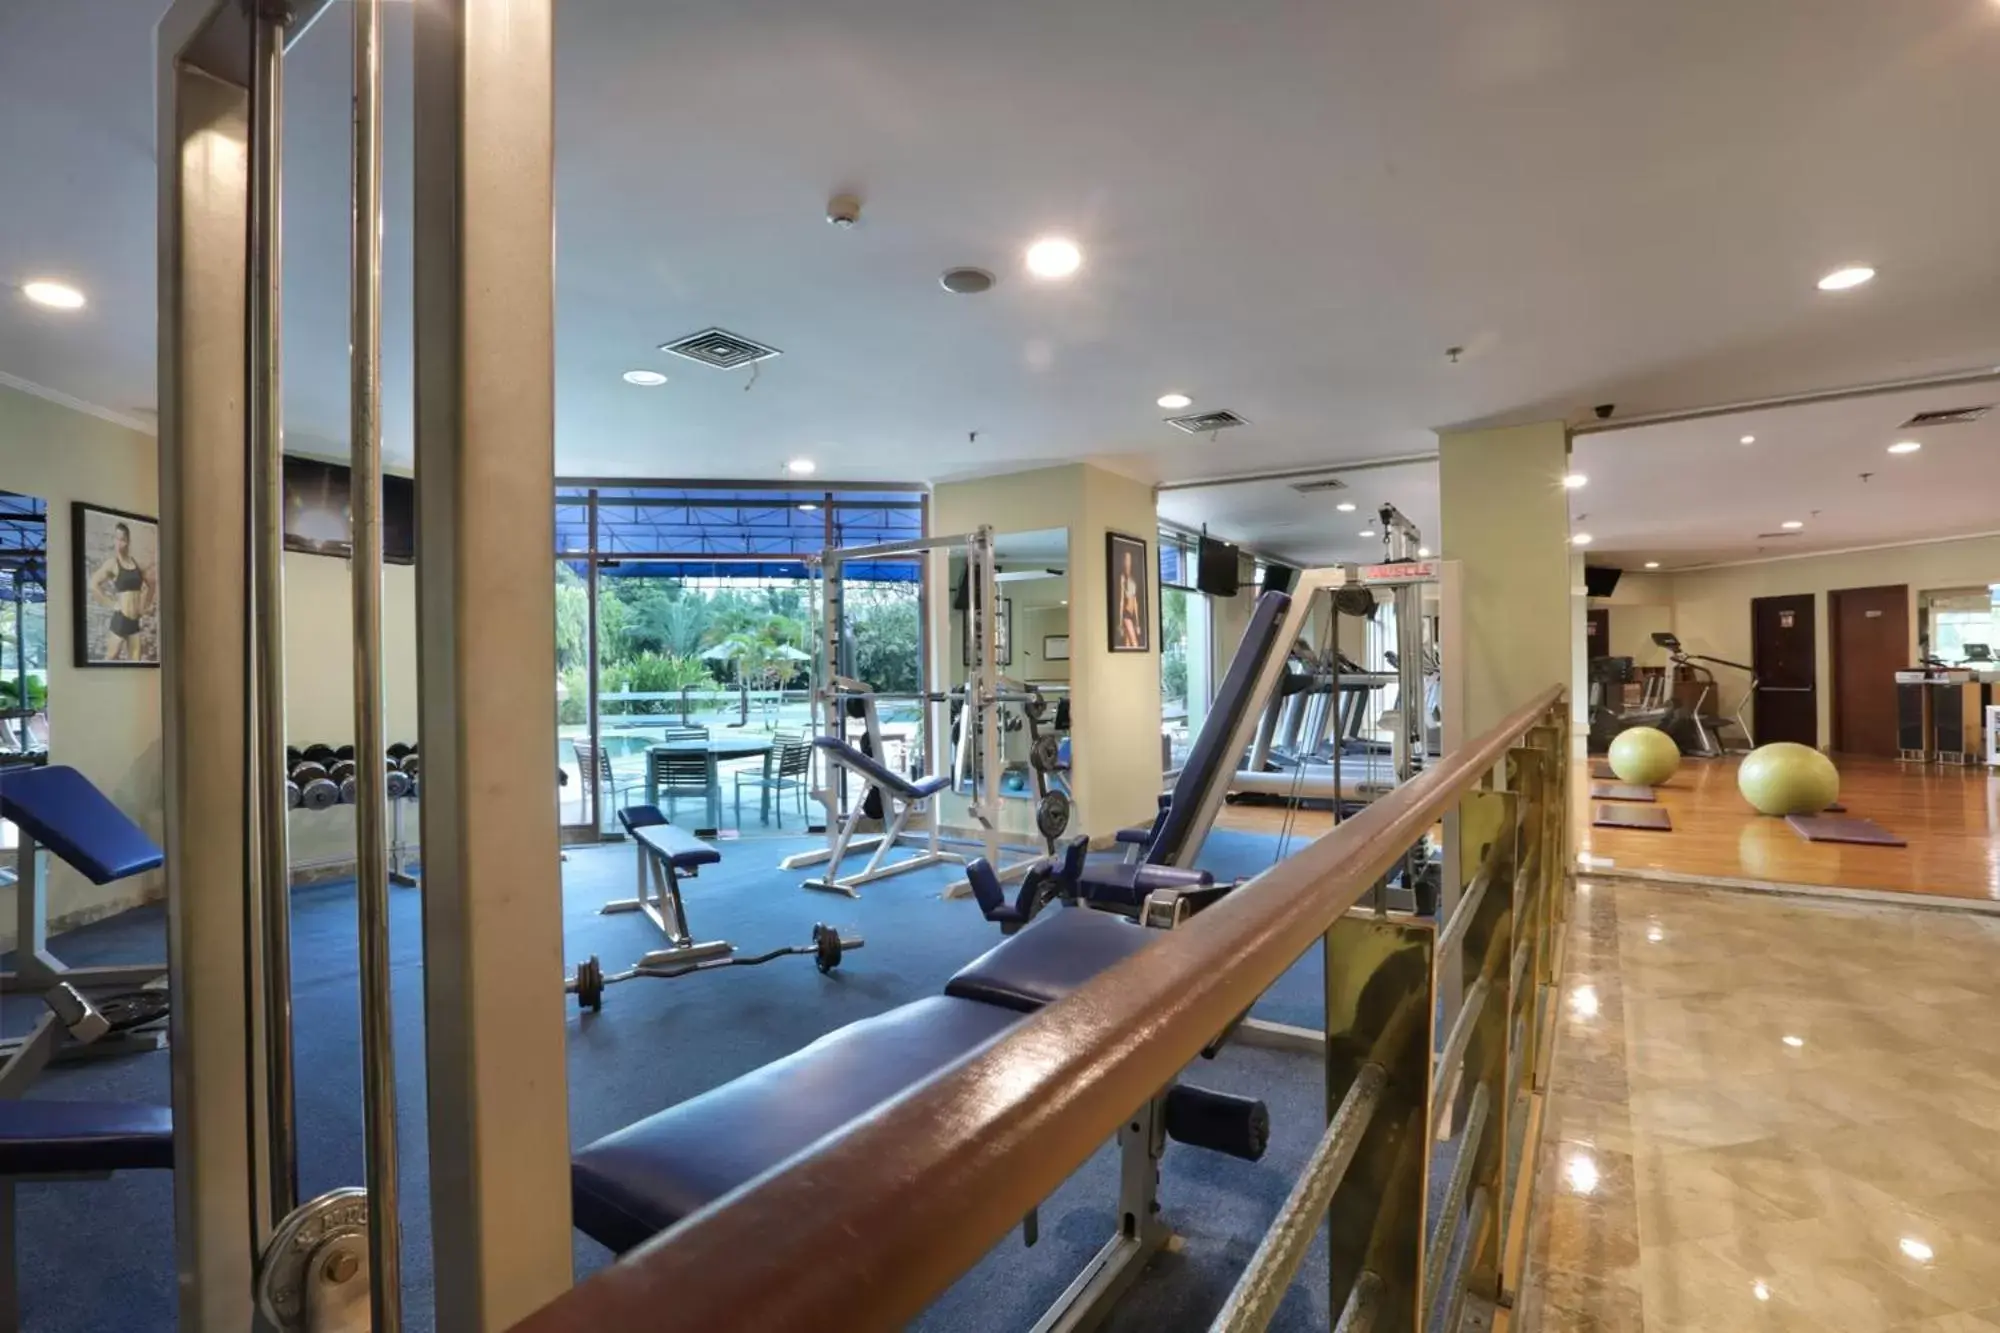 Fitness centre/facilities, Fitness Center/Facilities in Grand Candi Hotel